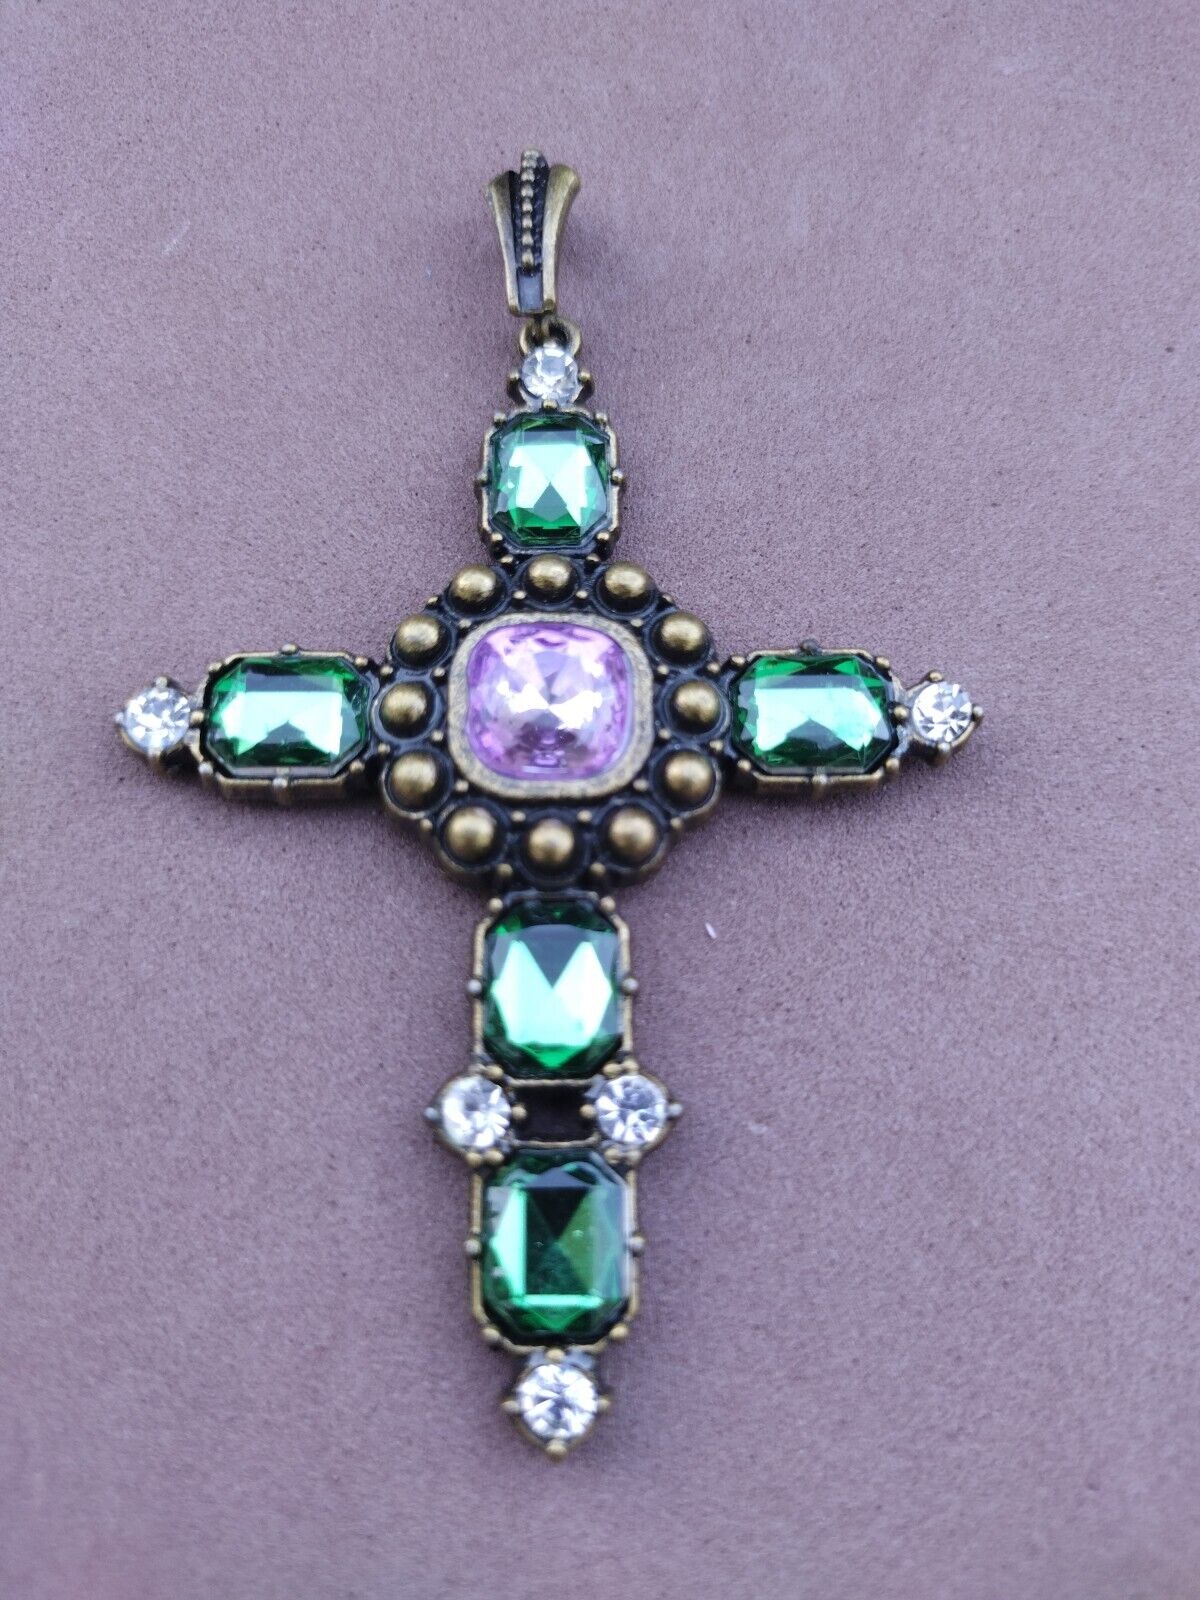 Antique Style Cross Pendant